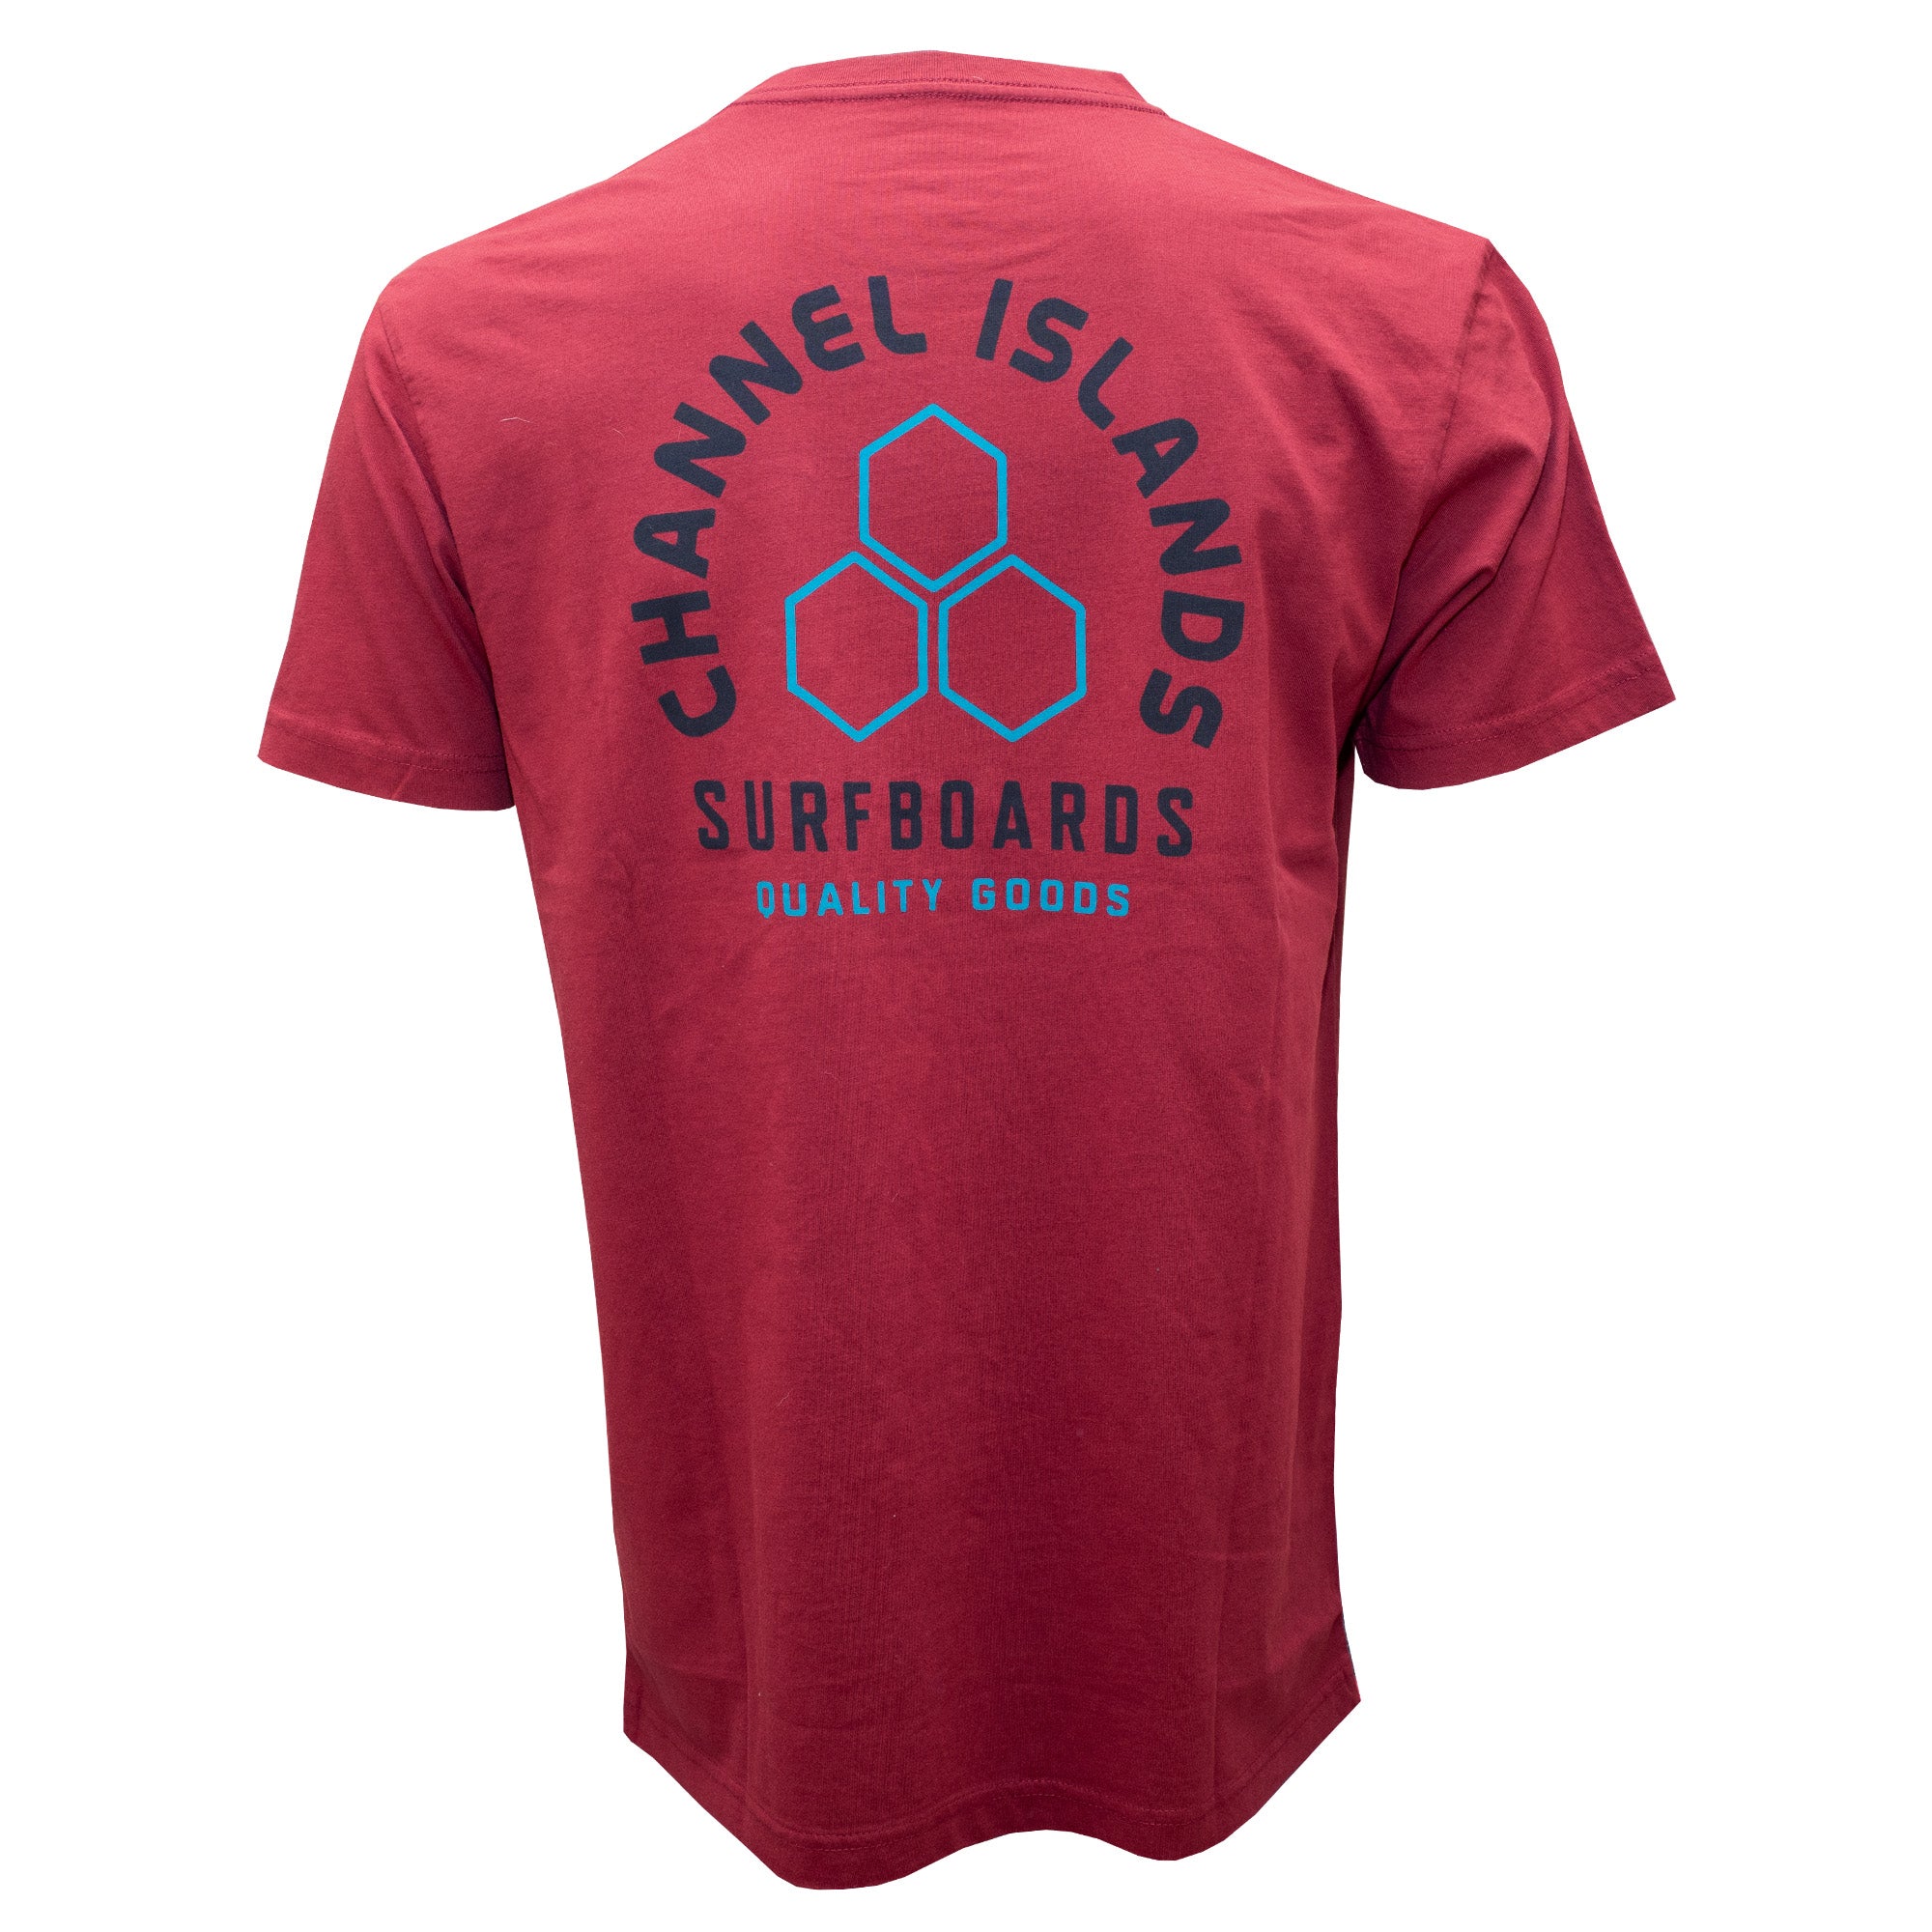 Channel Islands Horseshoe Men's S/S T-Shirt